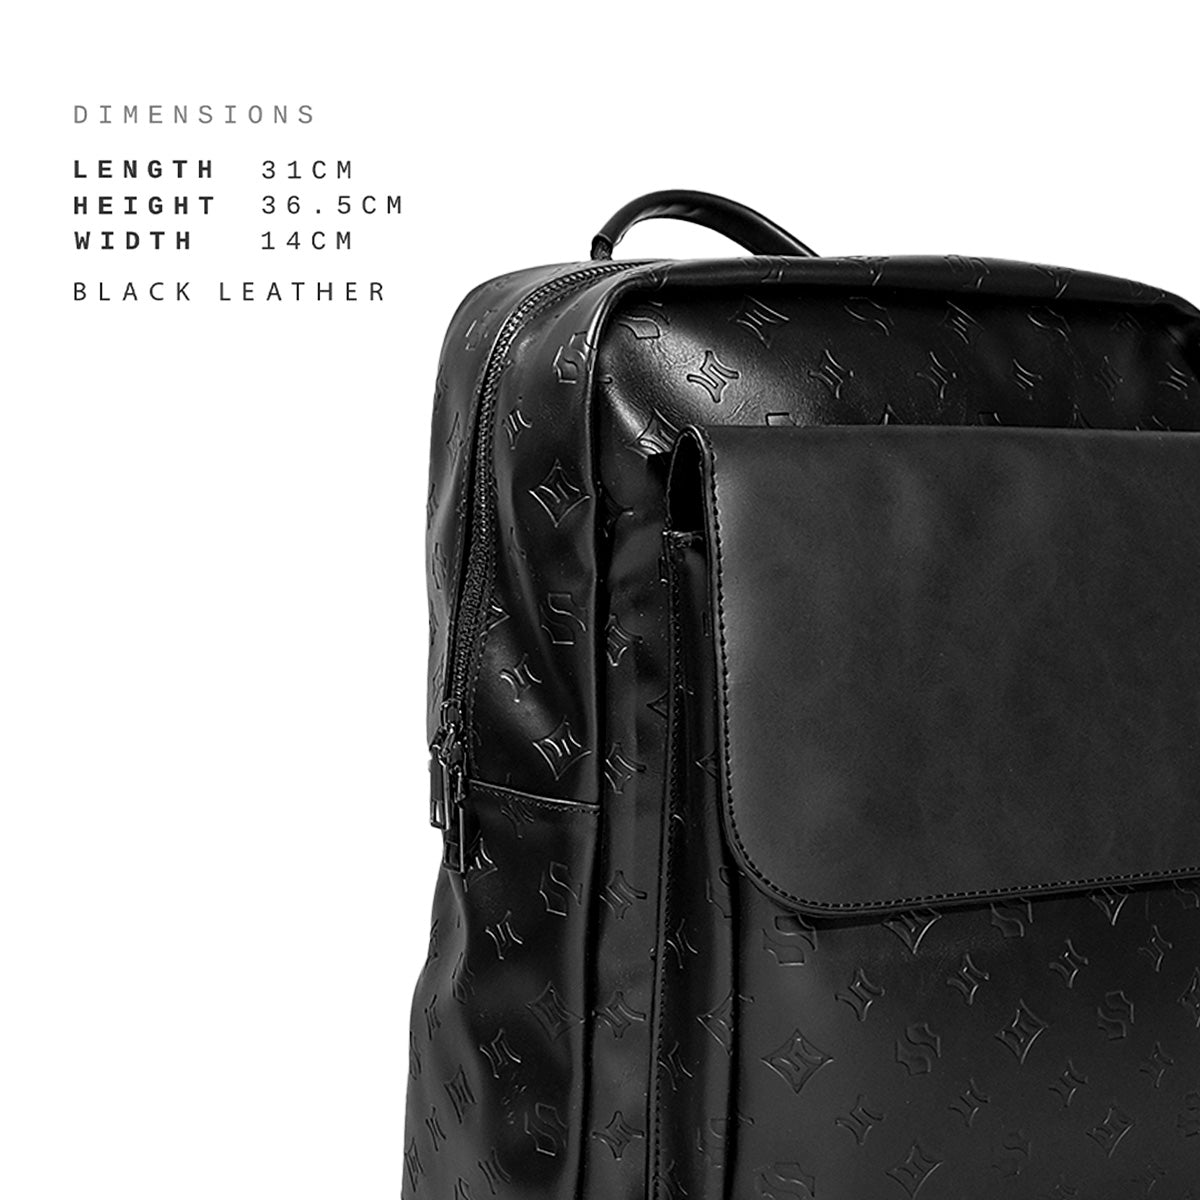 Shigetsu KOKUBU Debossed Monogram Bag Leather Backpack for School men